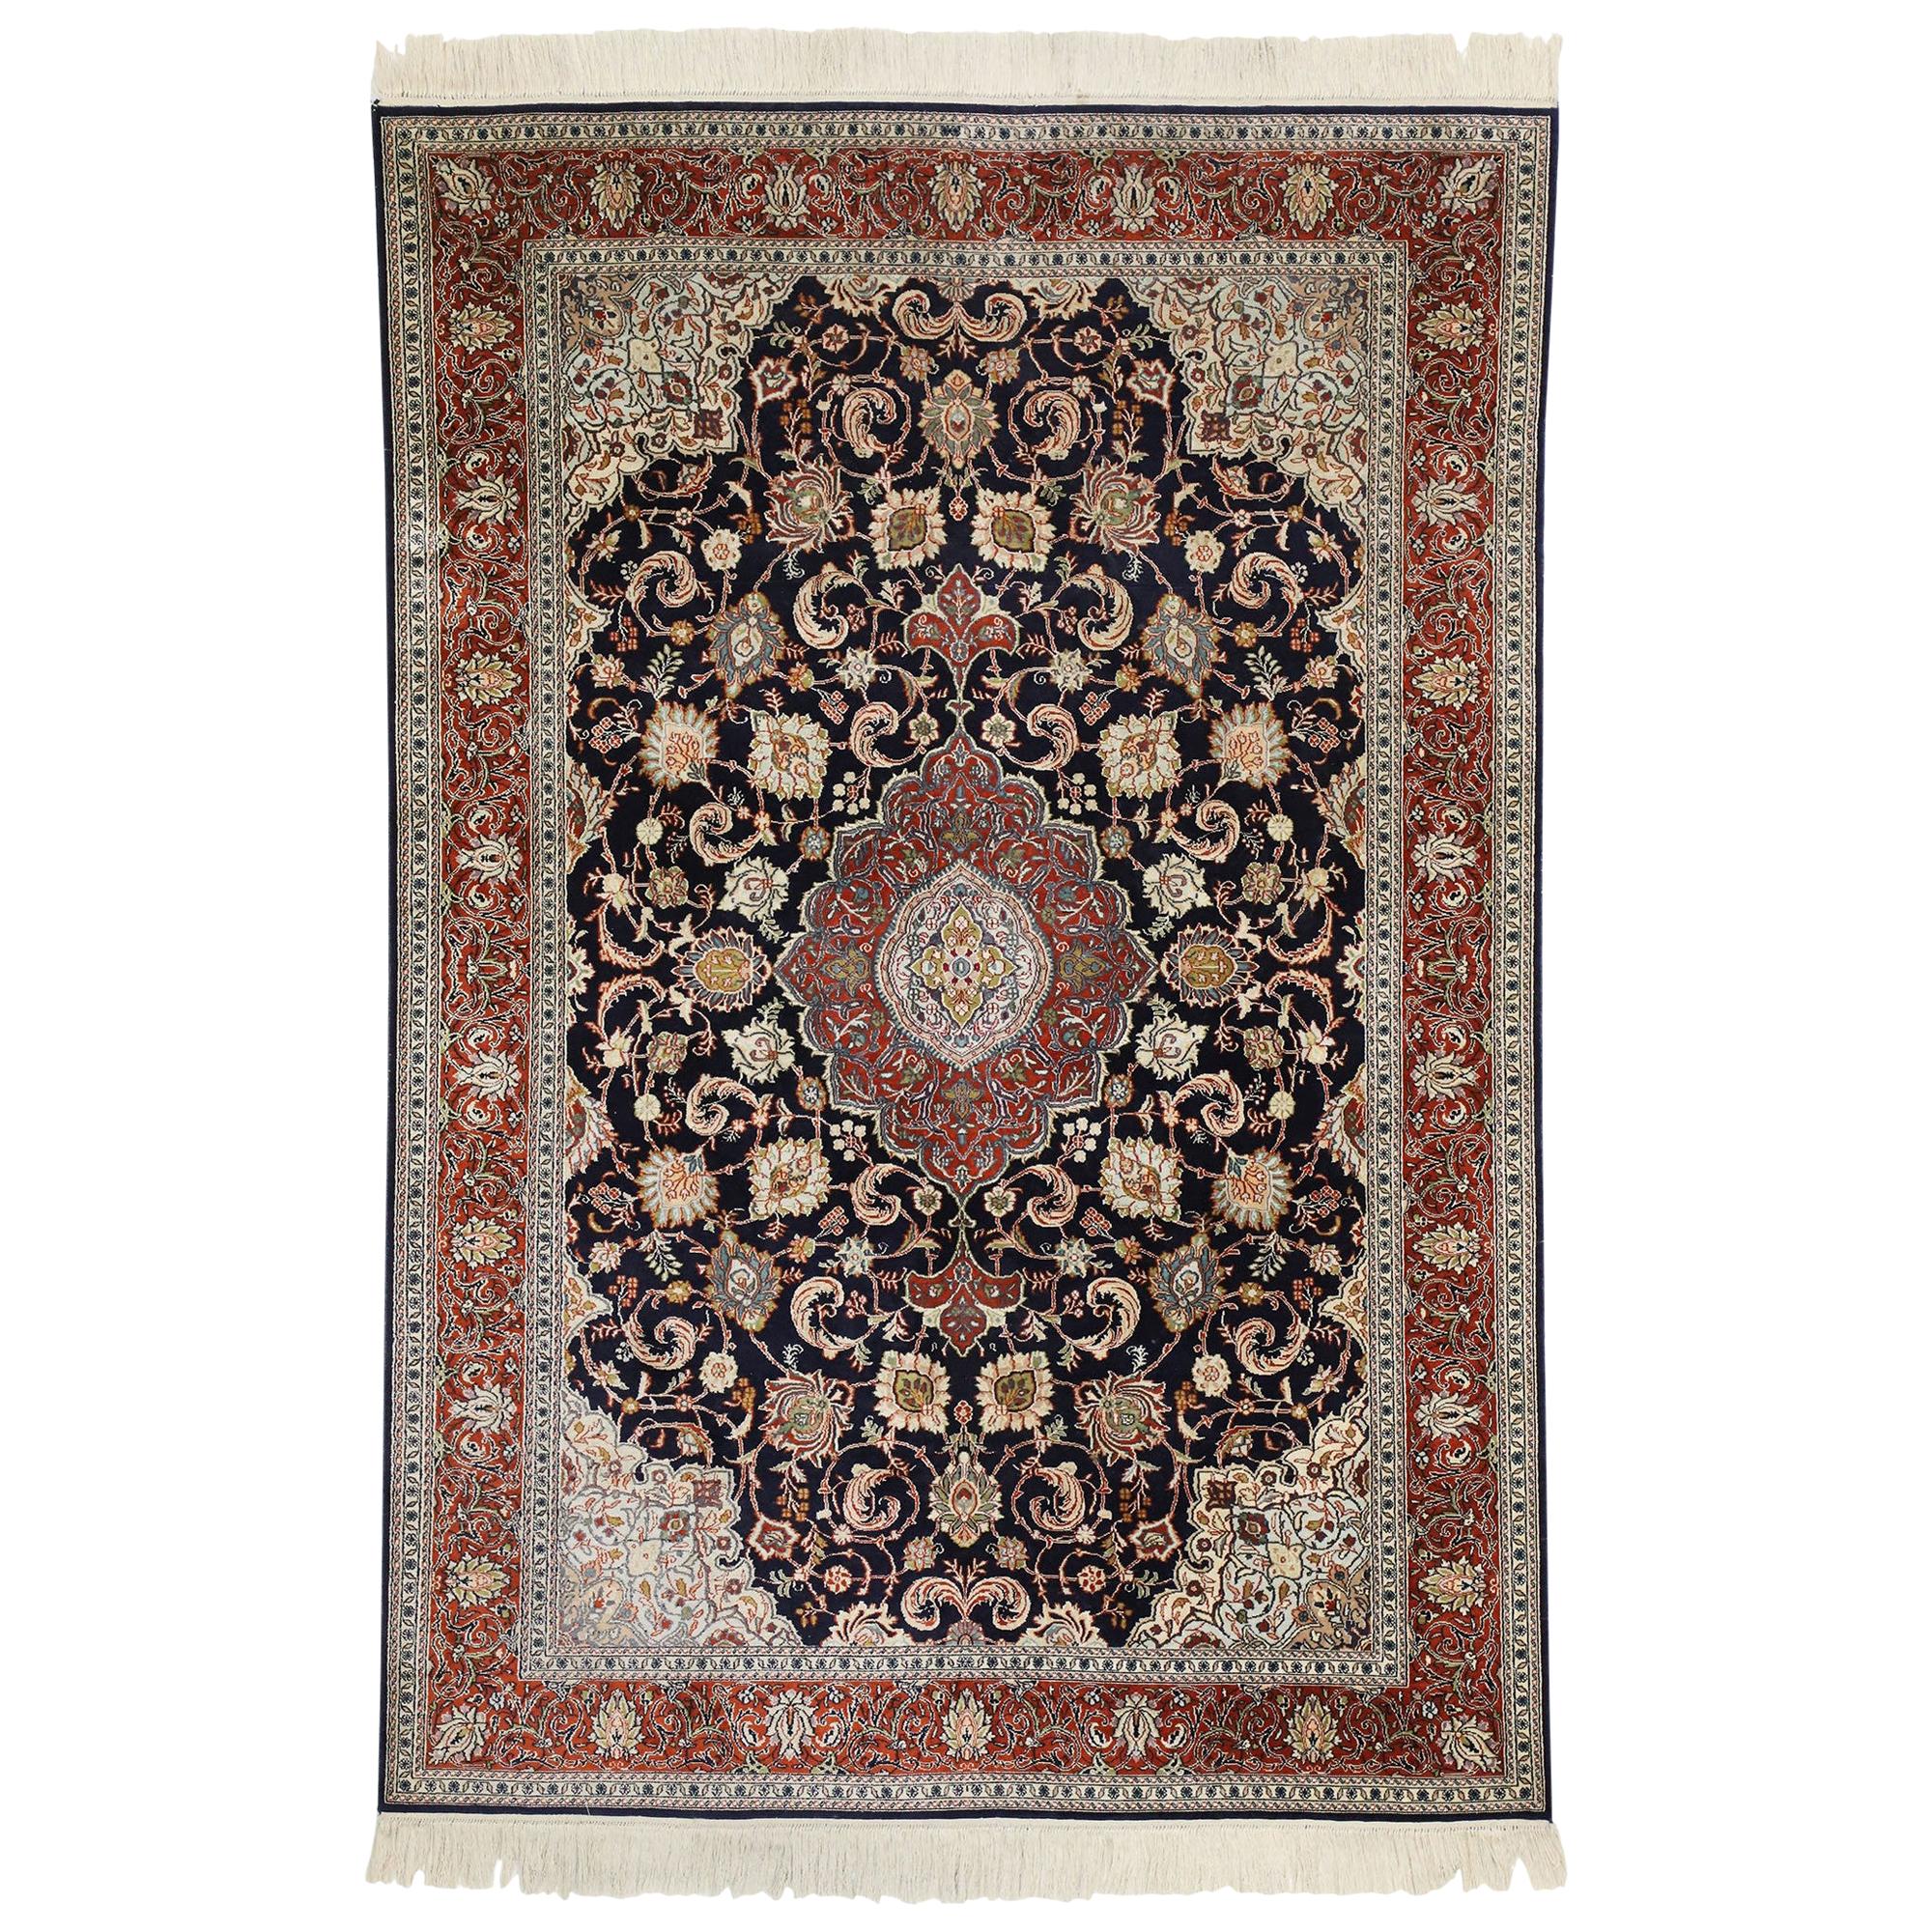 Vintage Persian Kashan Silk Rug with Old World Dutch Renaissance Style